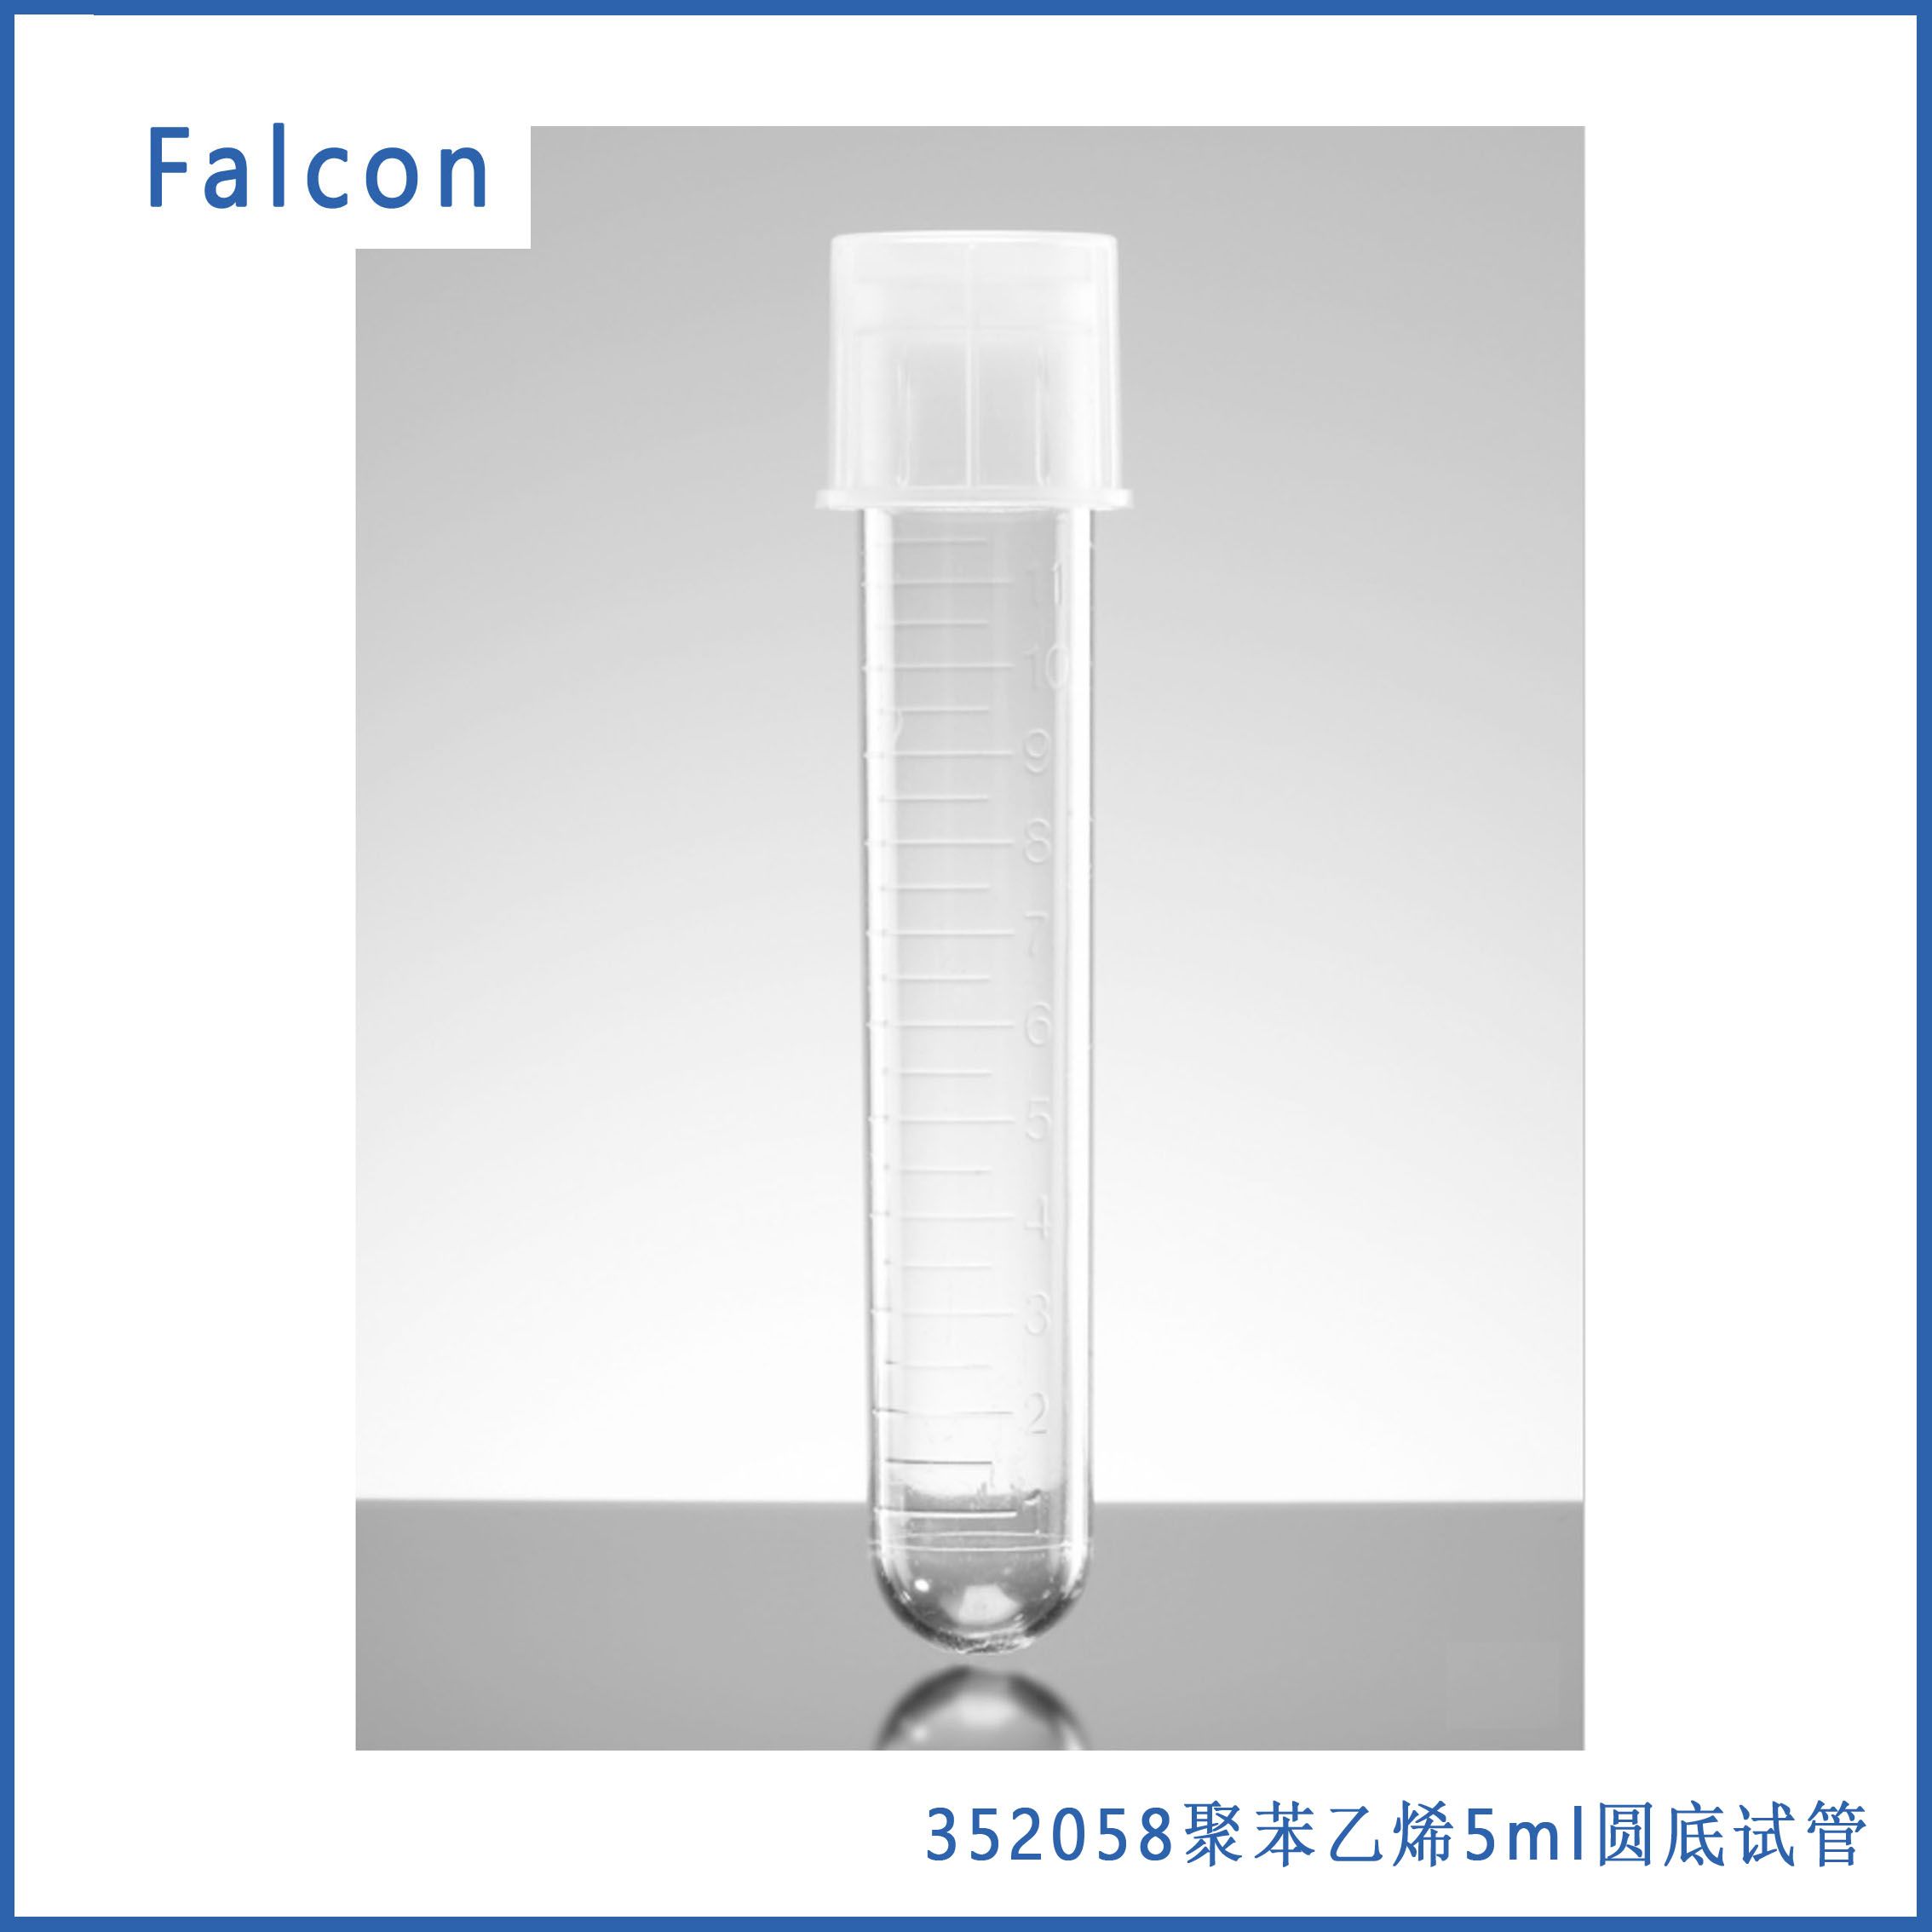 Corning falcon352058聚苯乙烯5ml圆底试管,锁扣帽,灭菌，12×75mm